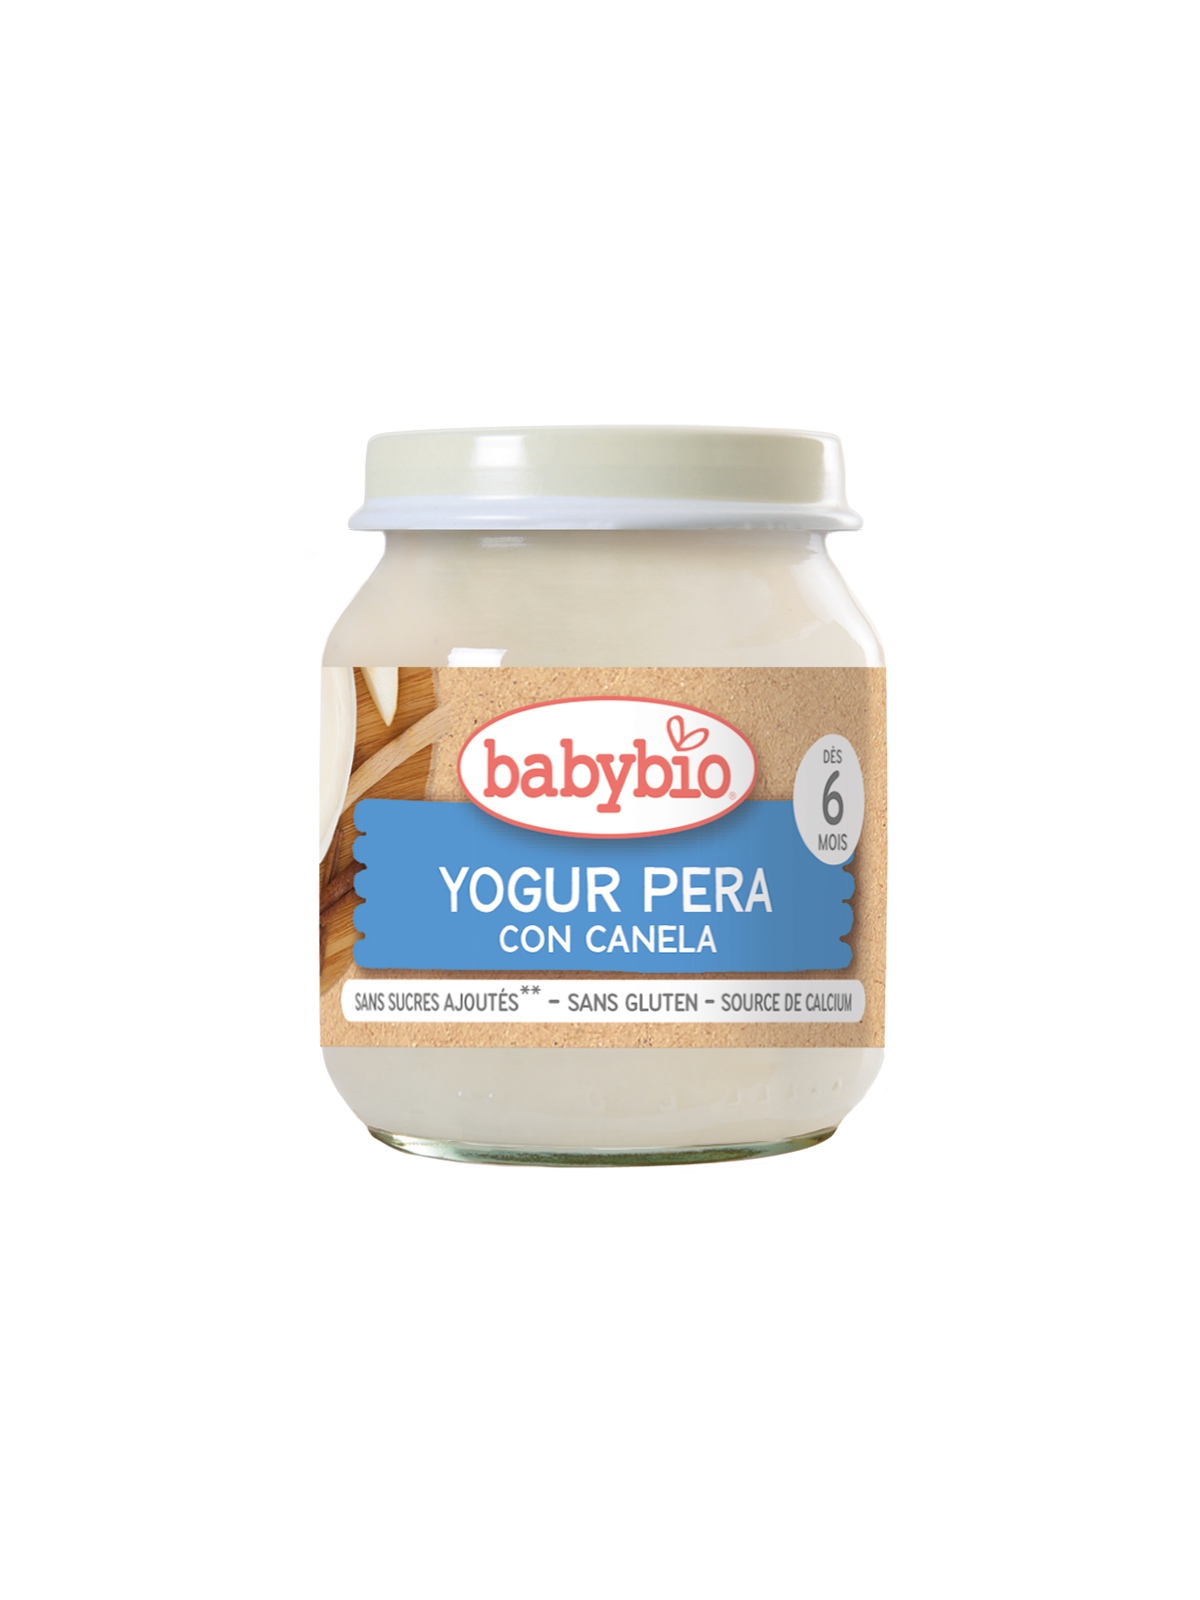 yogur pera babybio